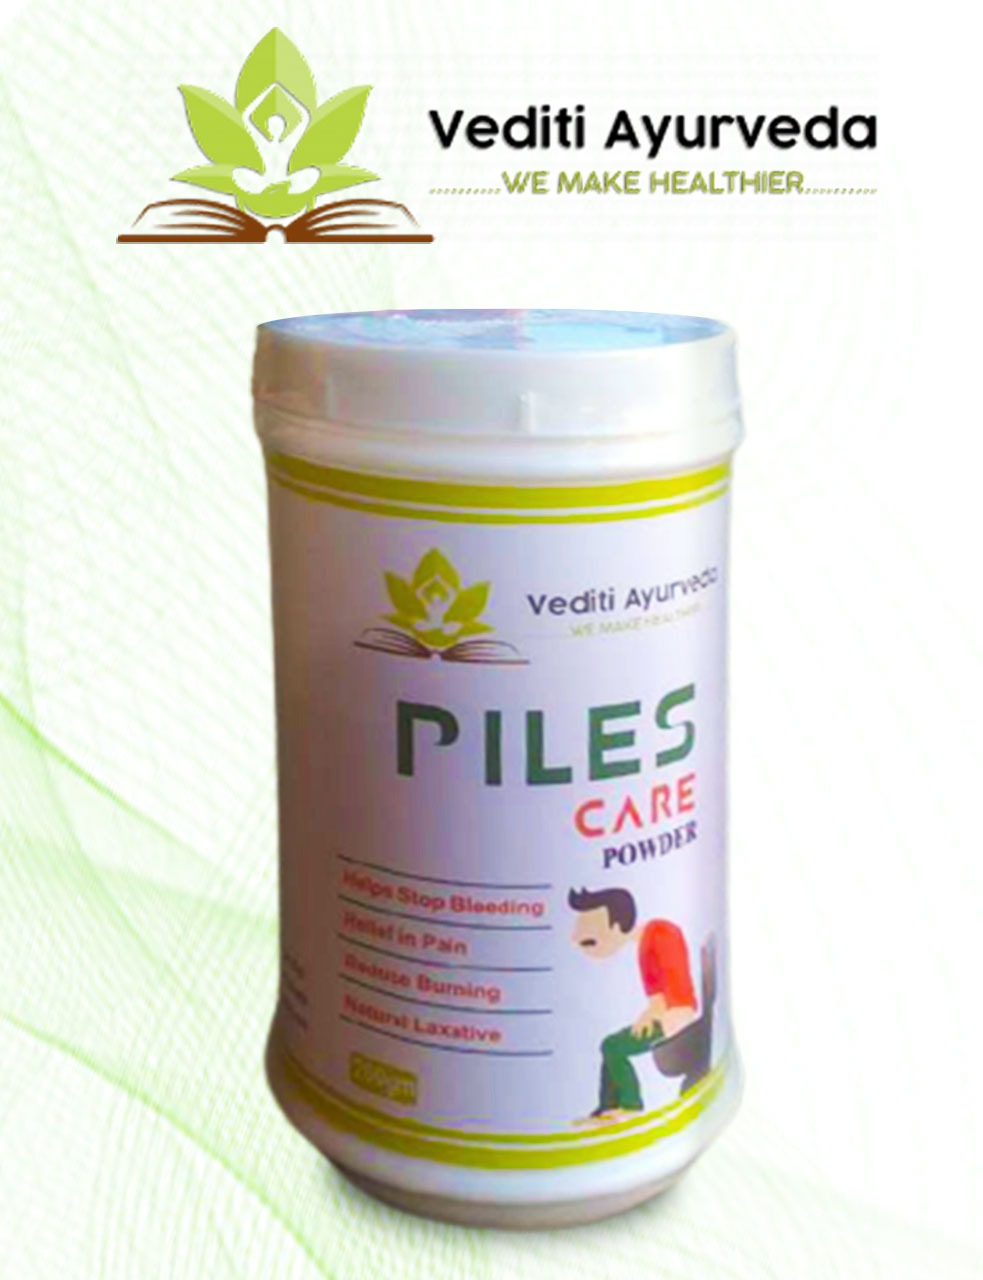 Piles Care-Best Ayurvedic Medicine For Piles